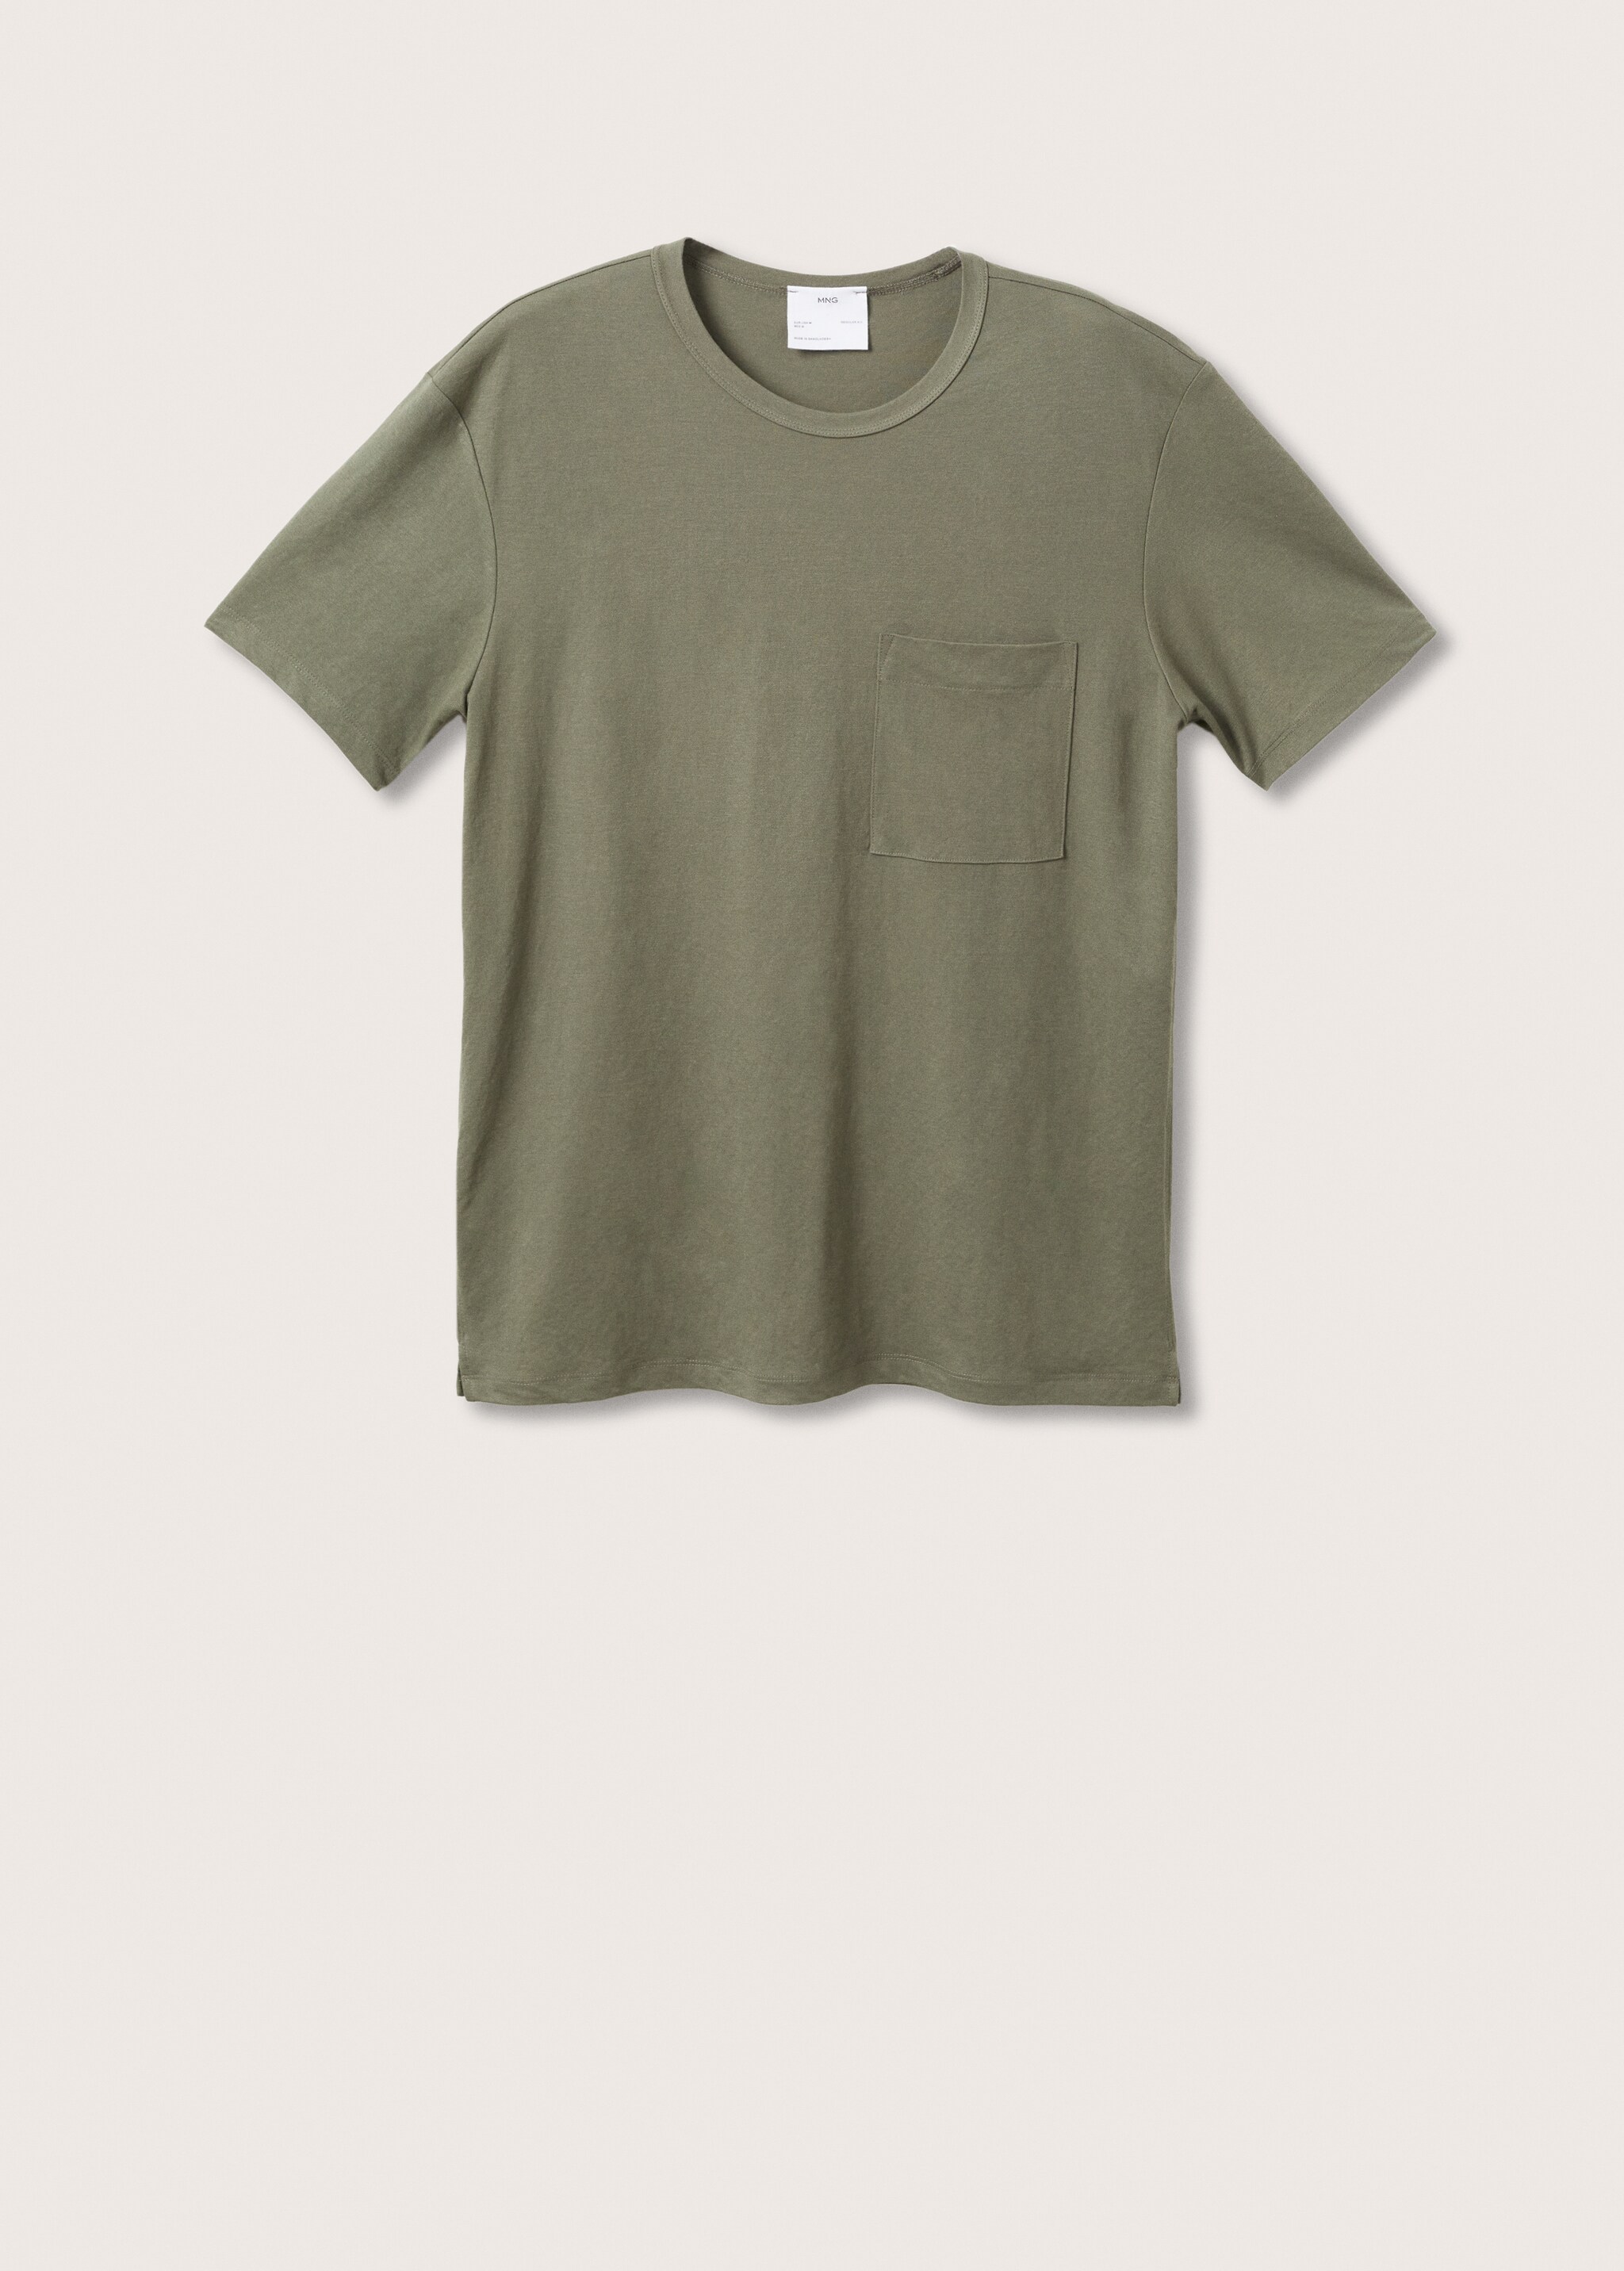 Camiseta ligera bolsillo - Artículo sin modelo